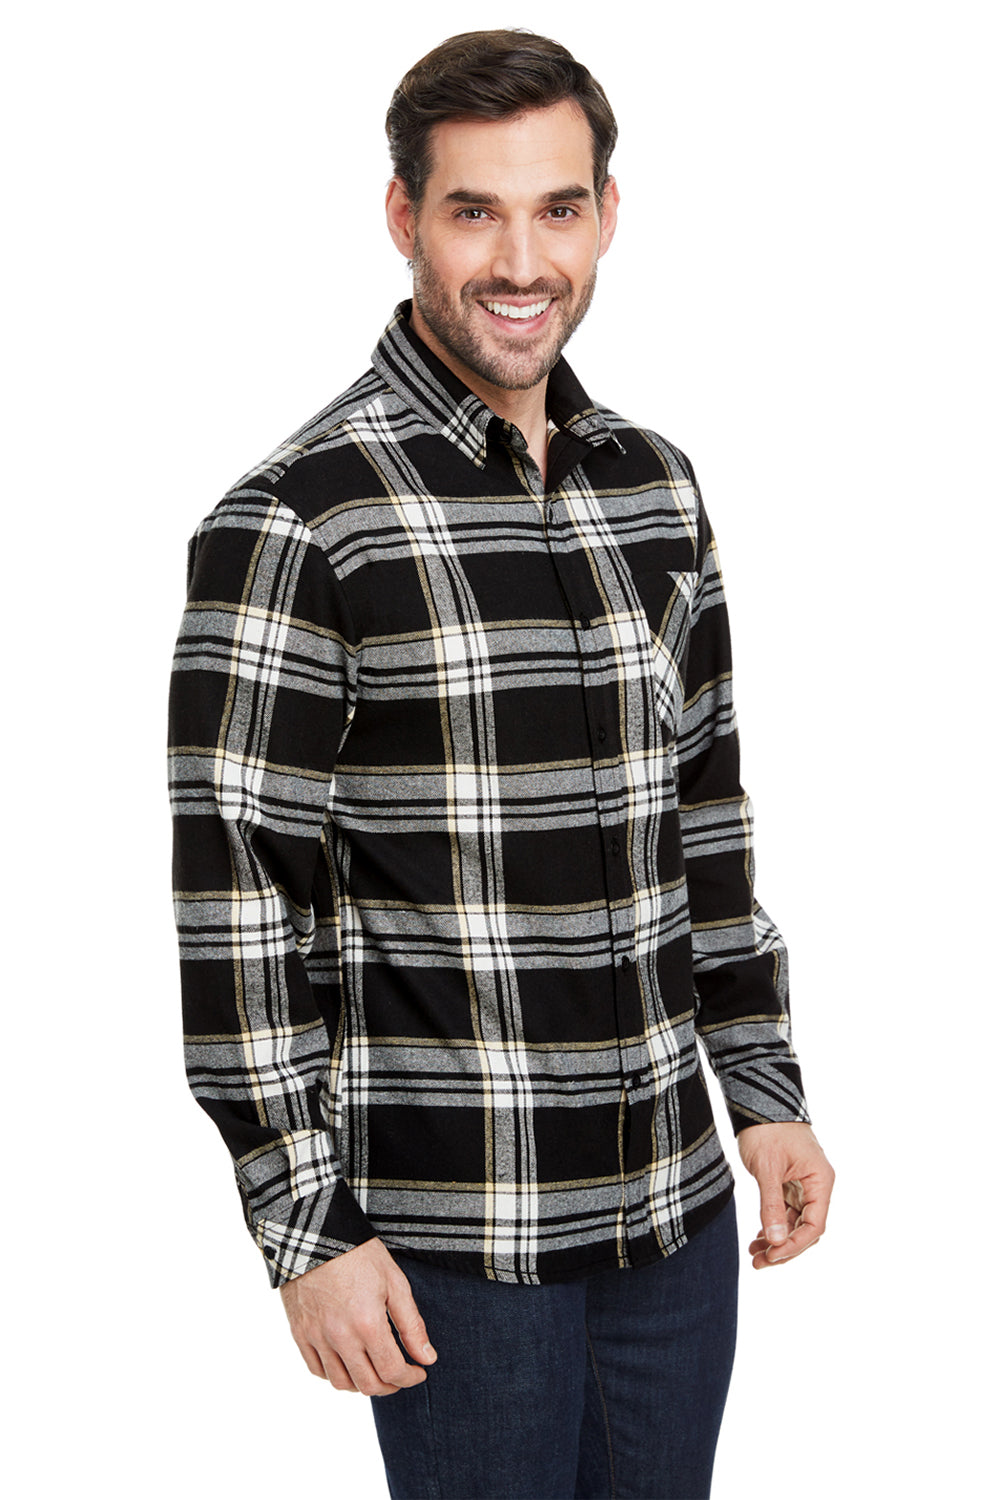 Burnside B8212 Mens Flannel Long Sleeve Button Down Shirt w/ Pocket Black/Ecru Model 3Q